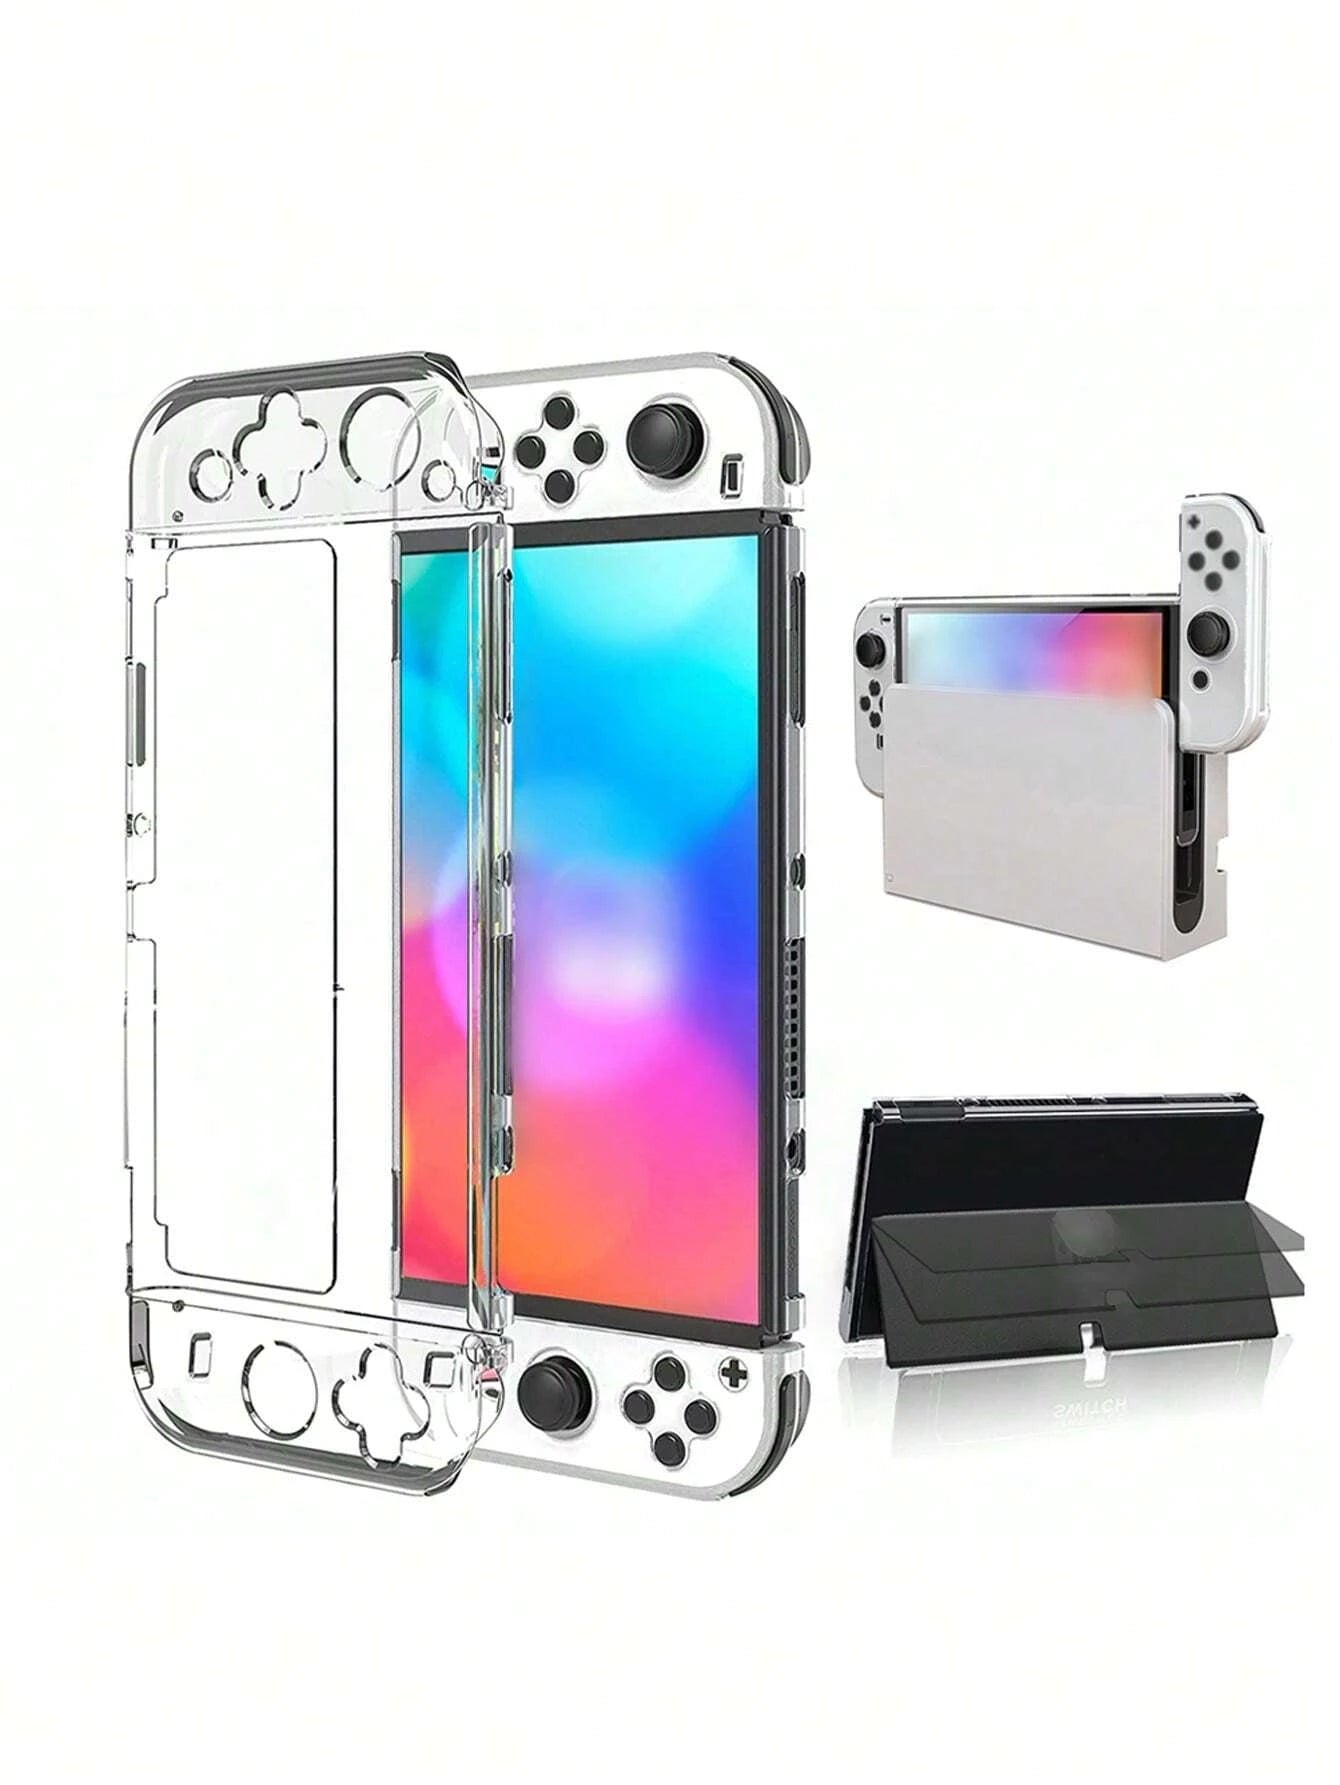 Estuche / Case / Protector para Nintendo Switch OLED | Transparente | Policarbonato | CCE-EST-19